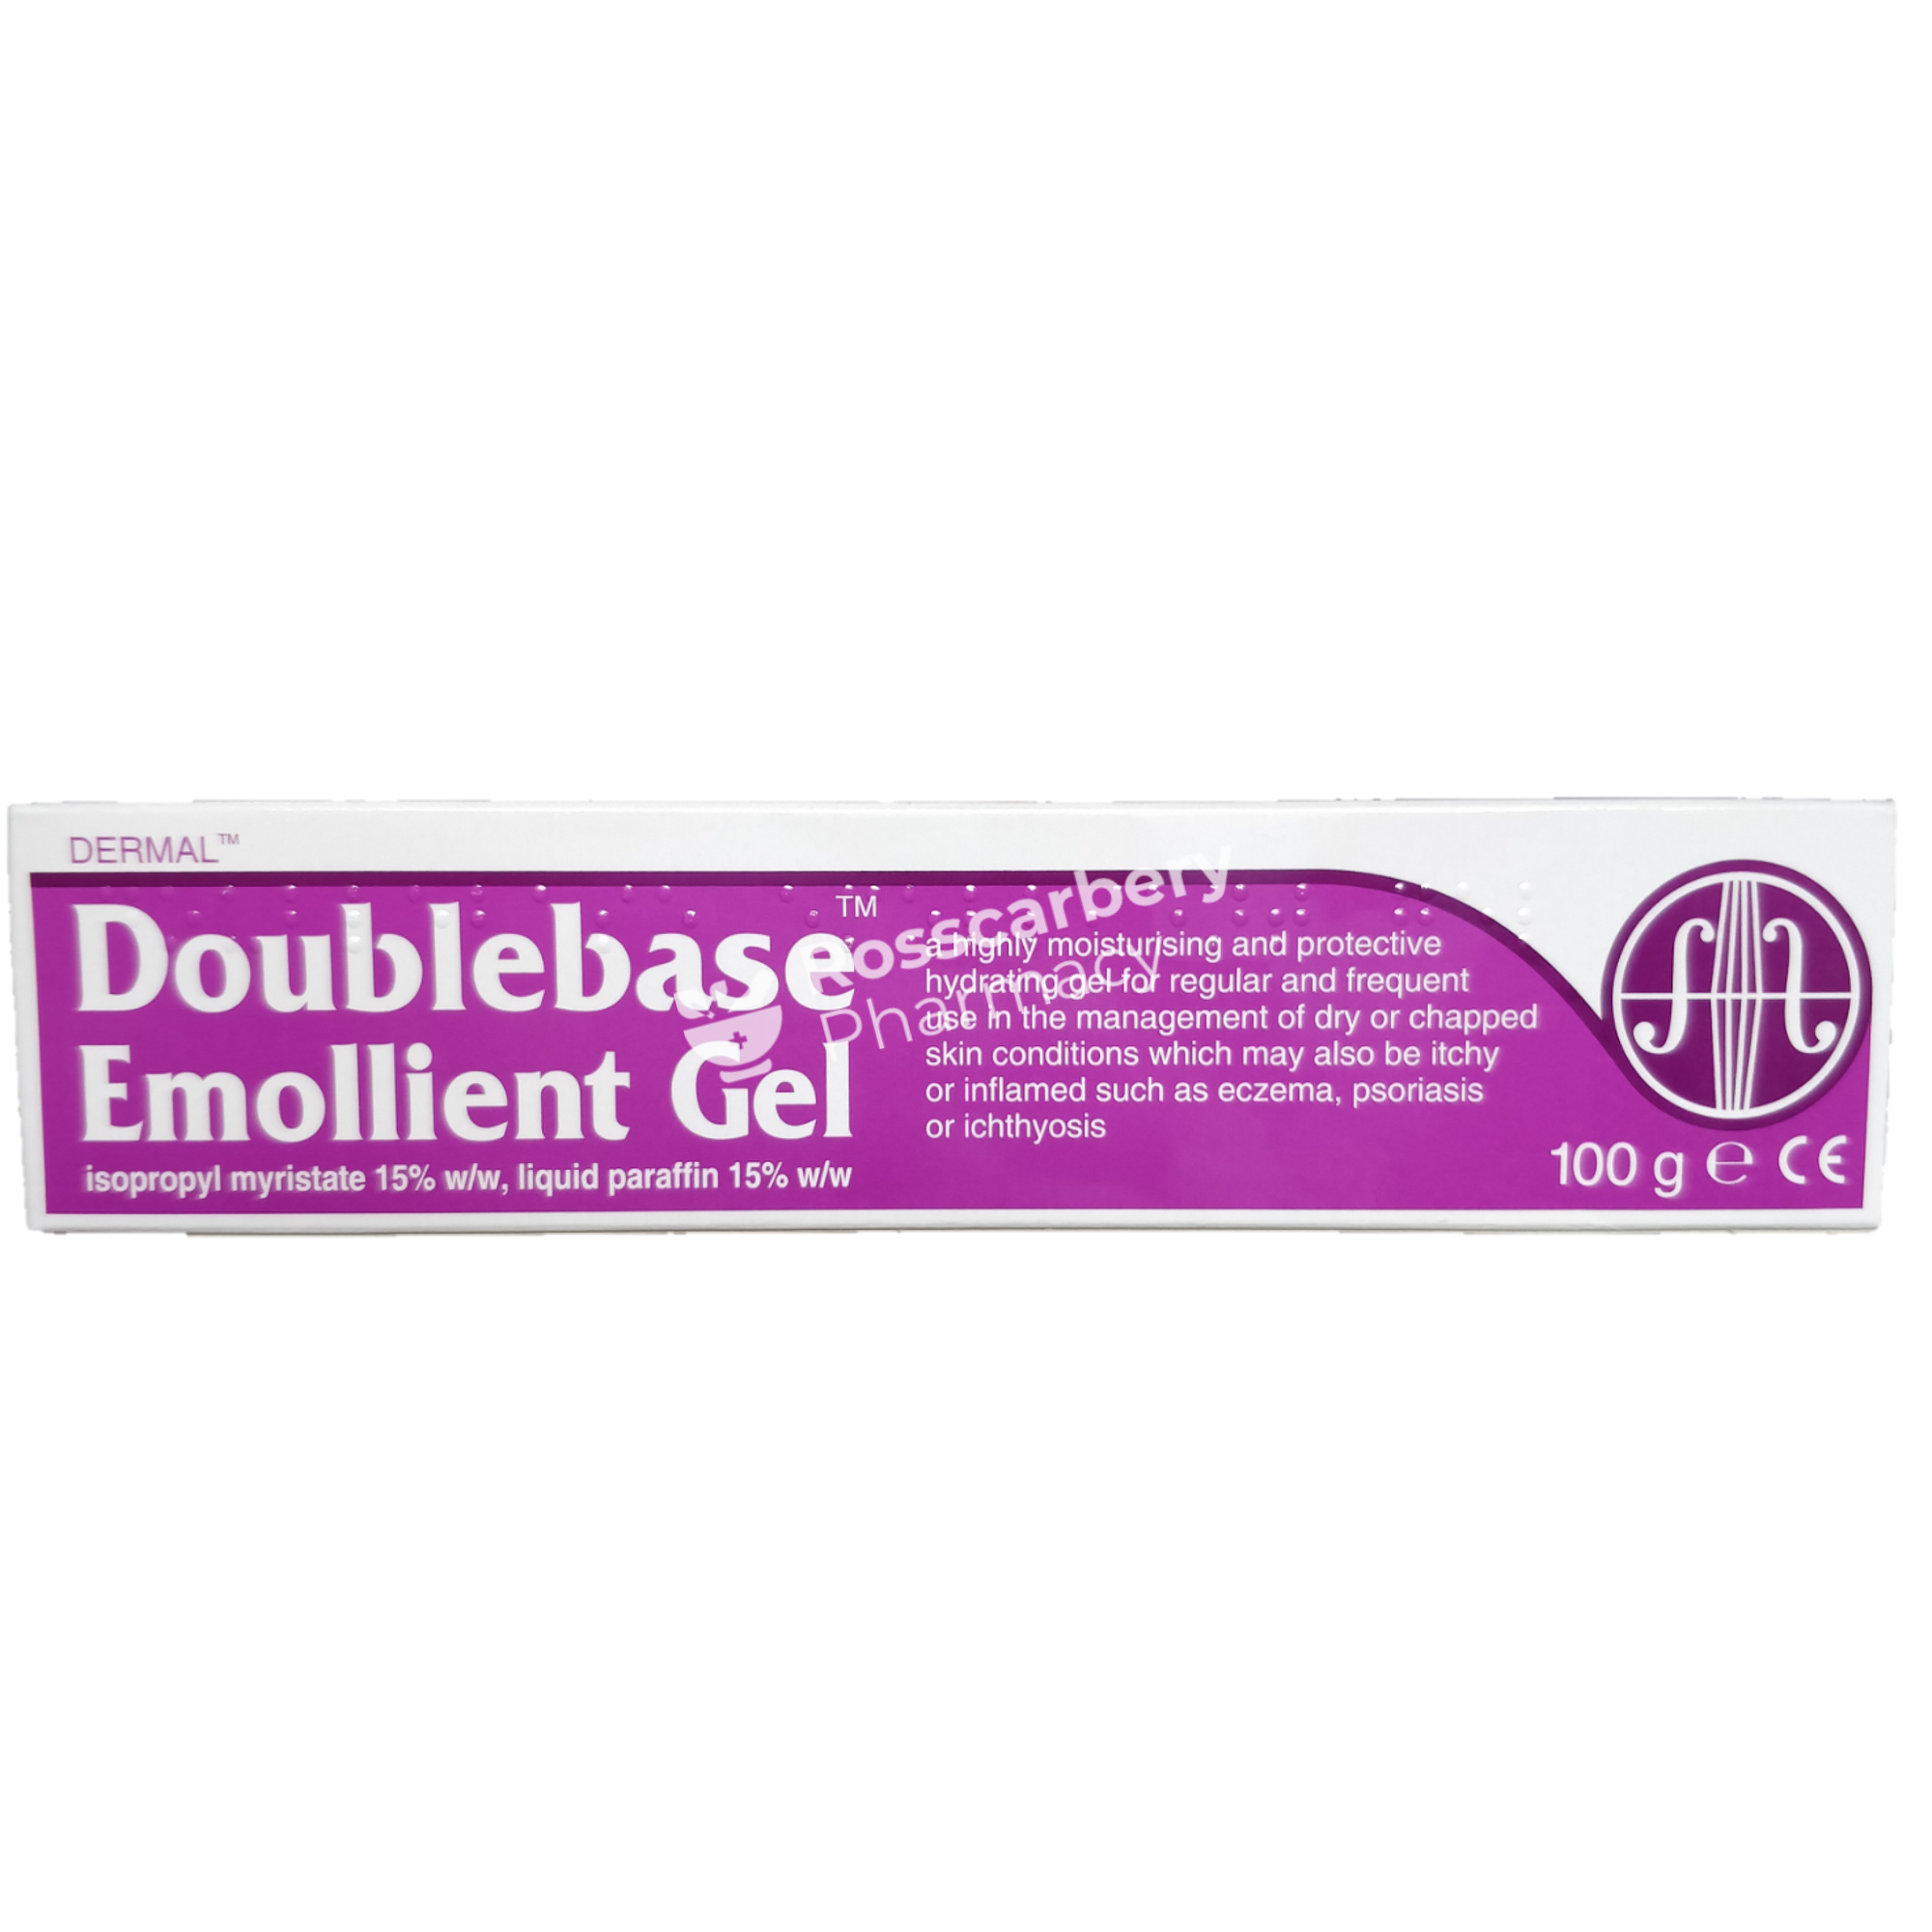 Dermal - Doublebase Emollient Gel Tube Body Moisturiser